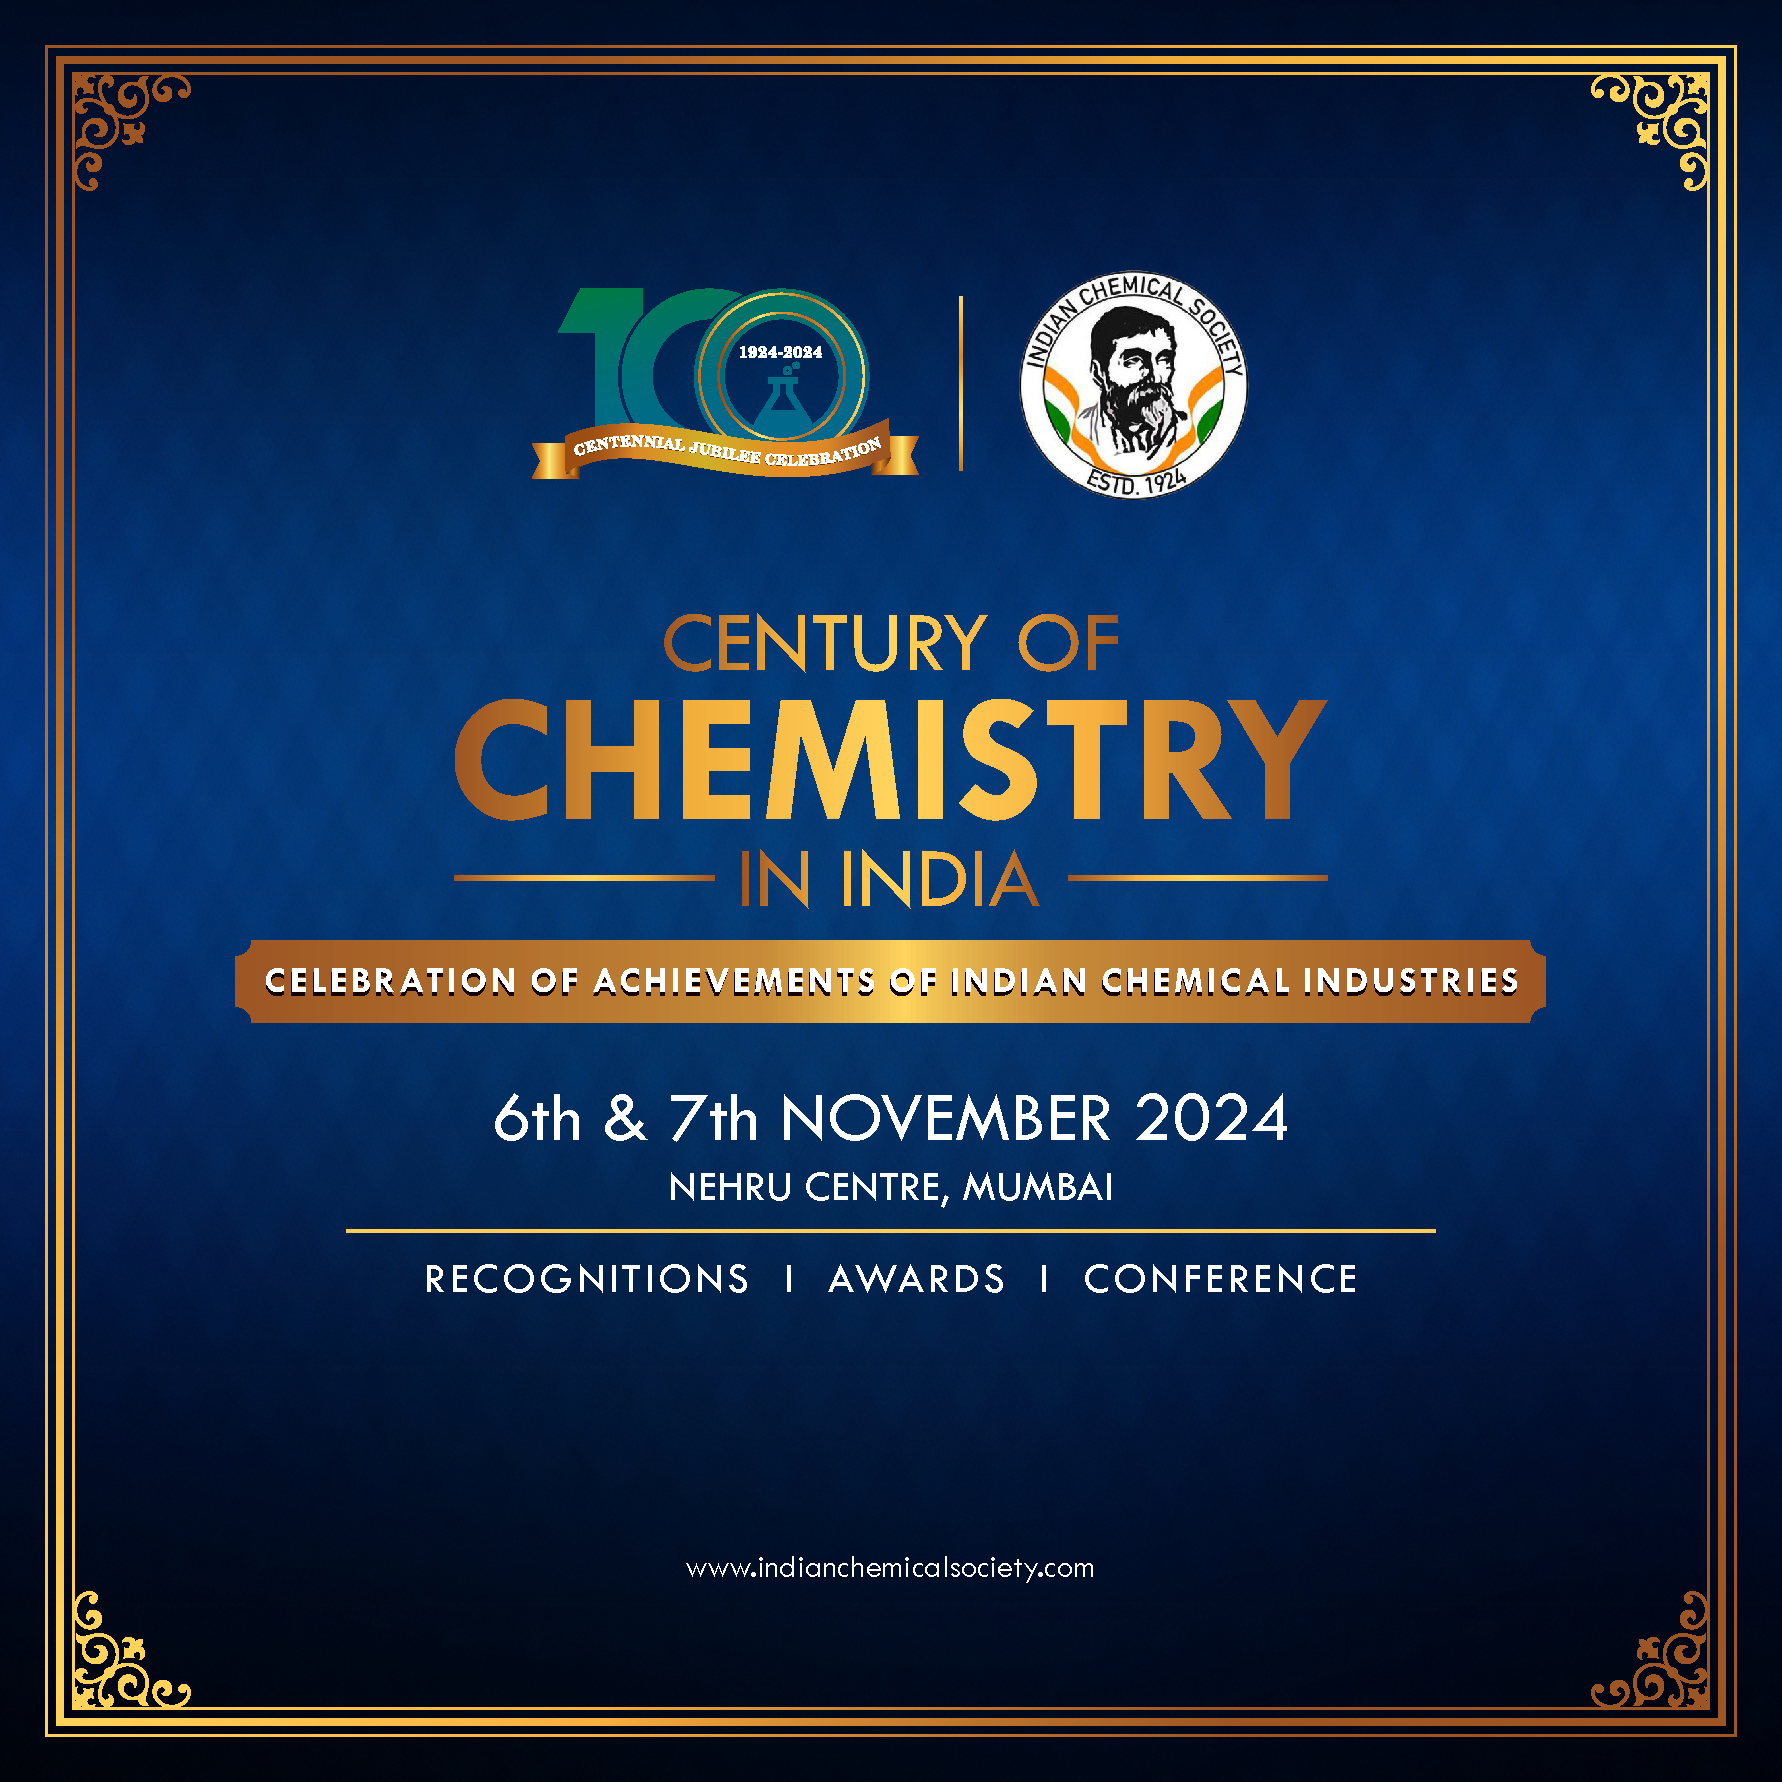 Century of Chemistry in India 2024